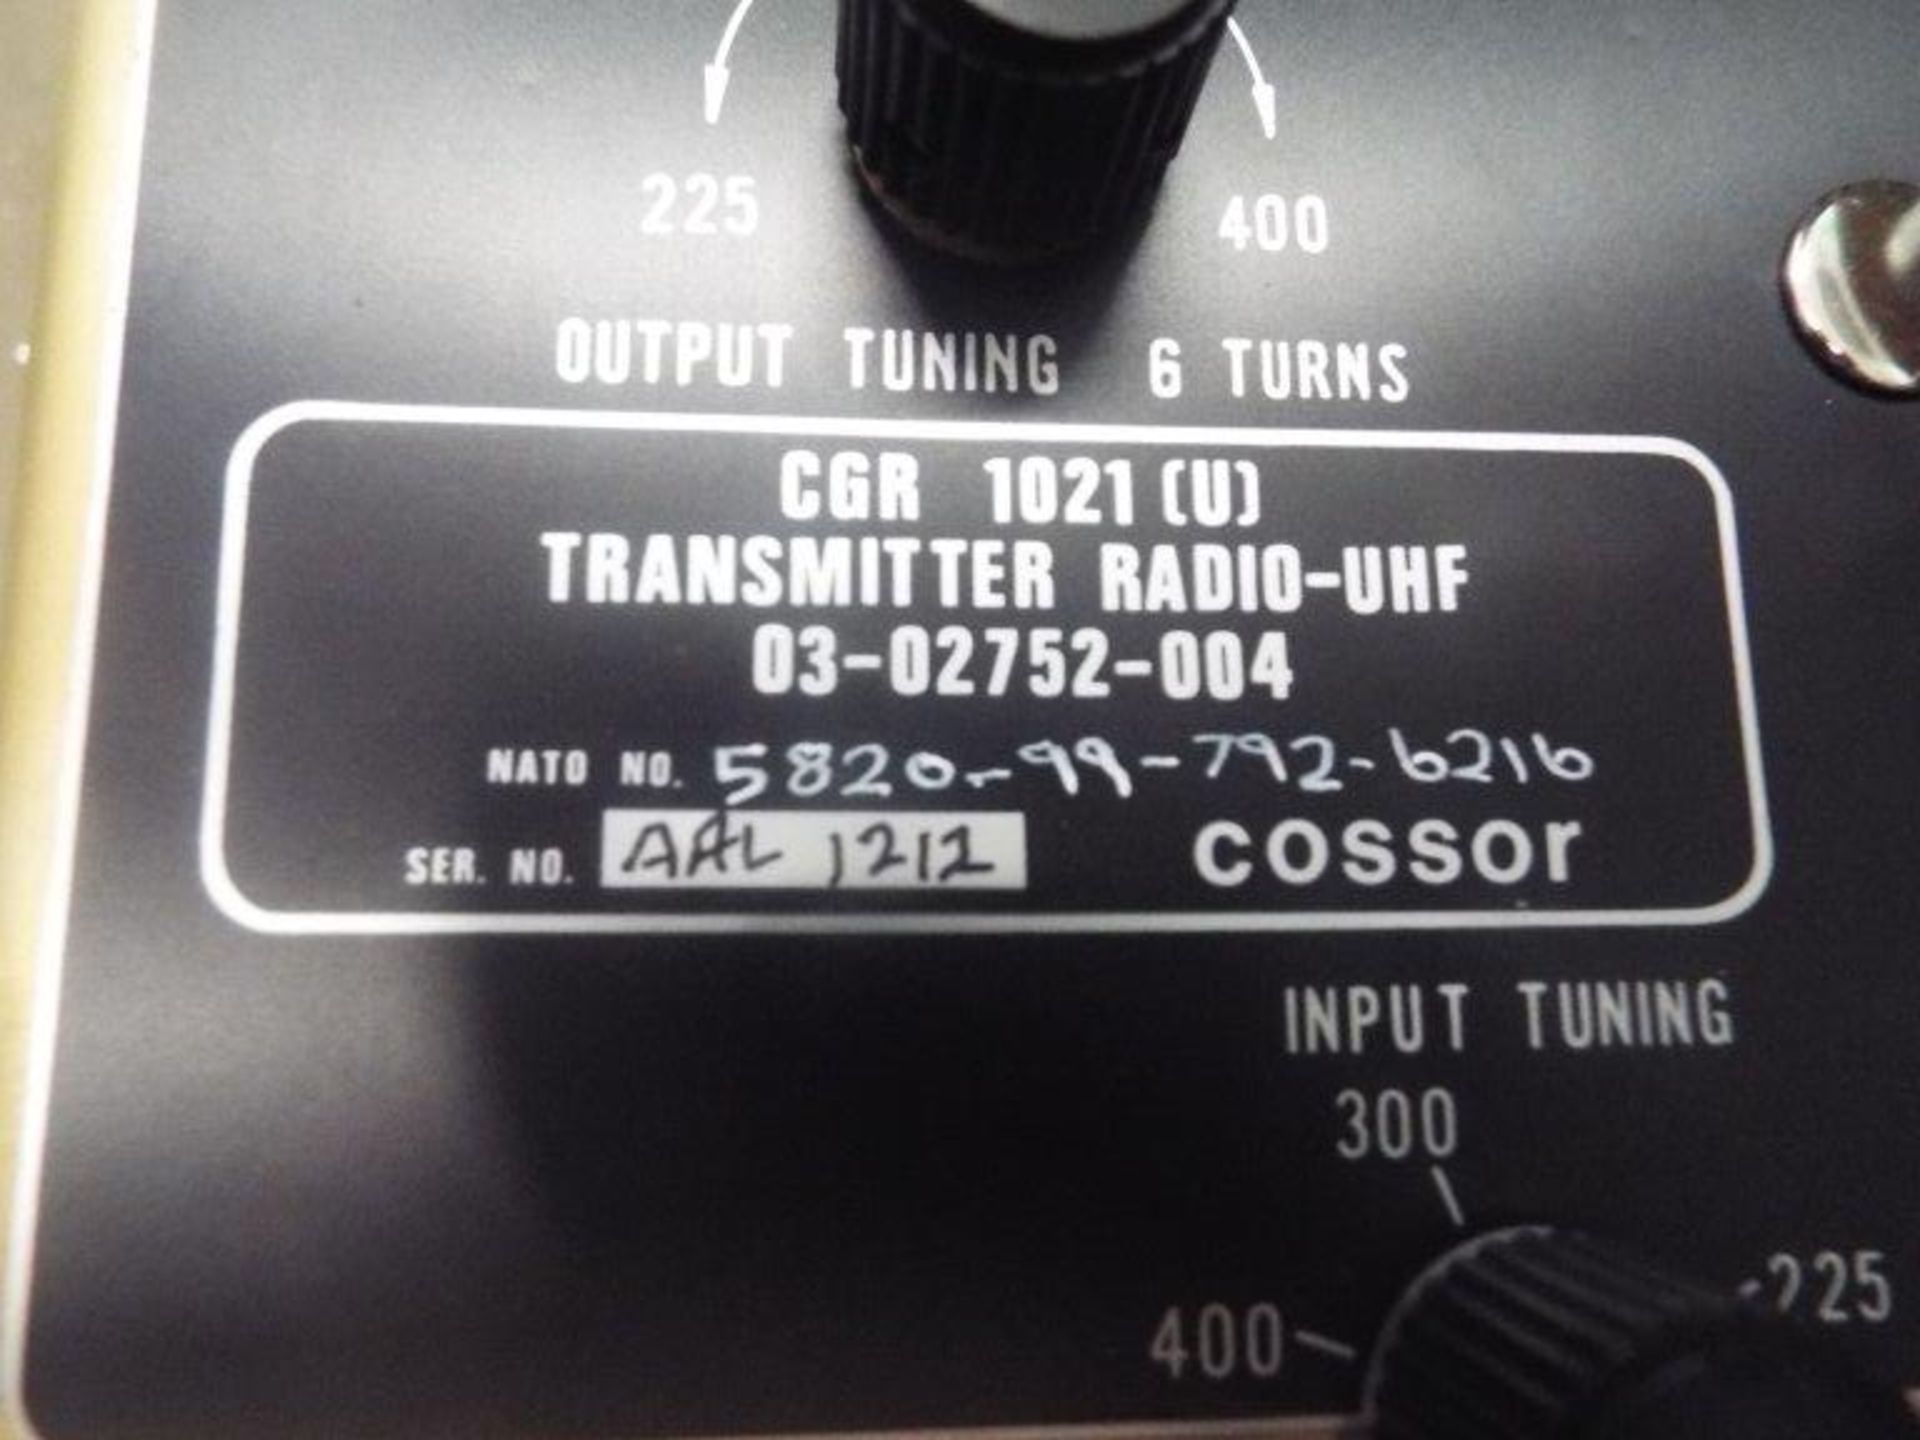 Cossor CGR 1021(U) UHF Radio Transmitter - Image 4 of 6